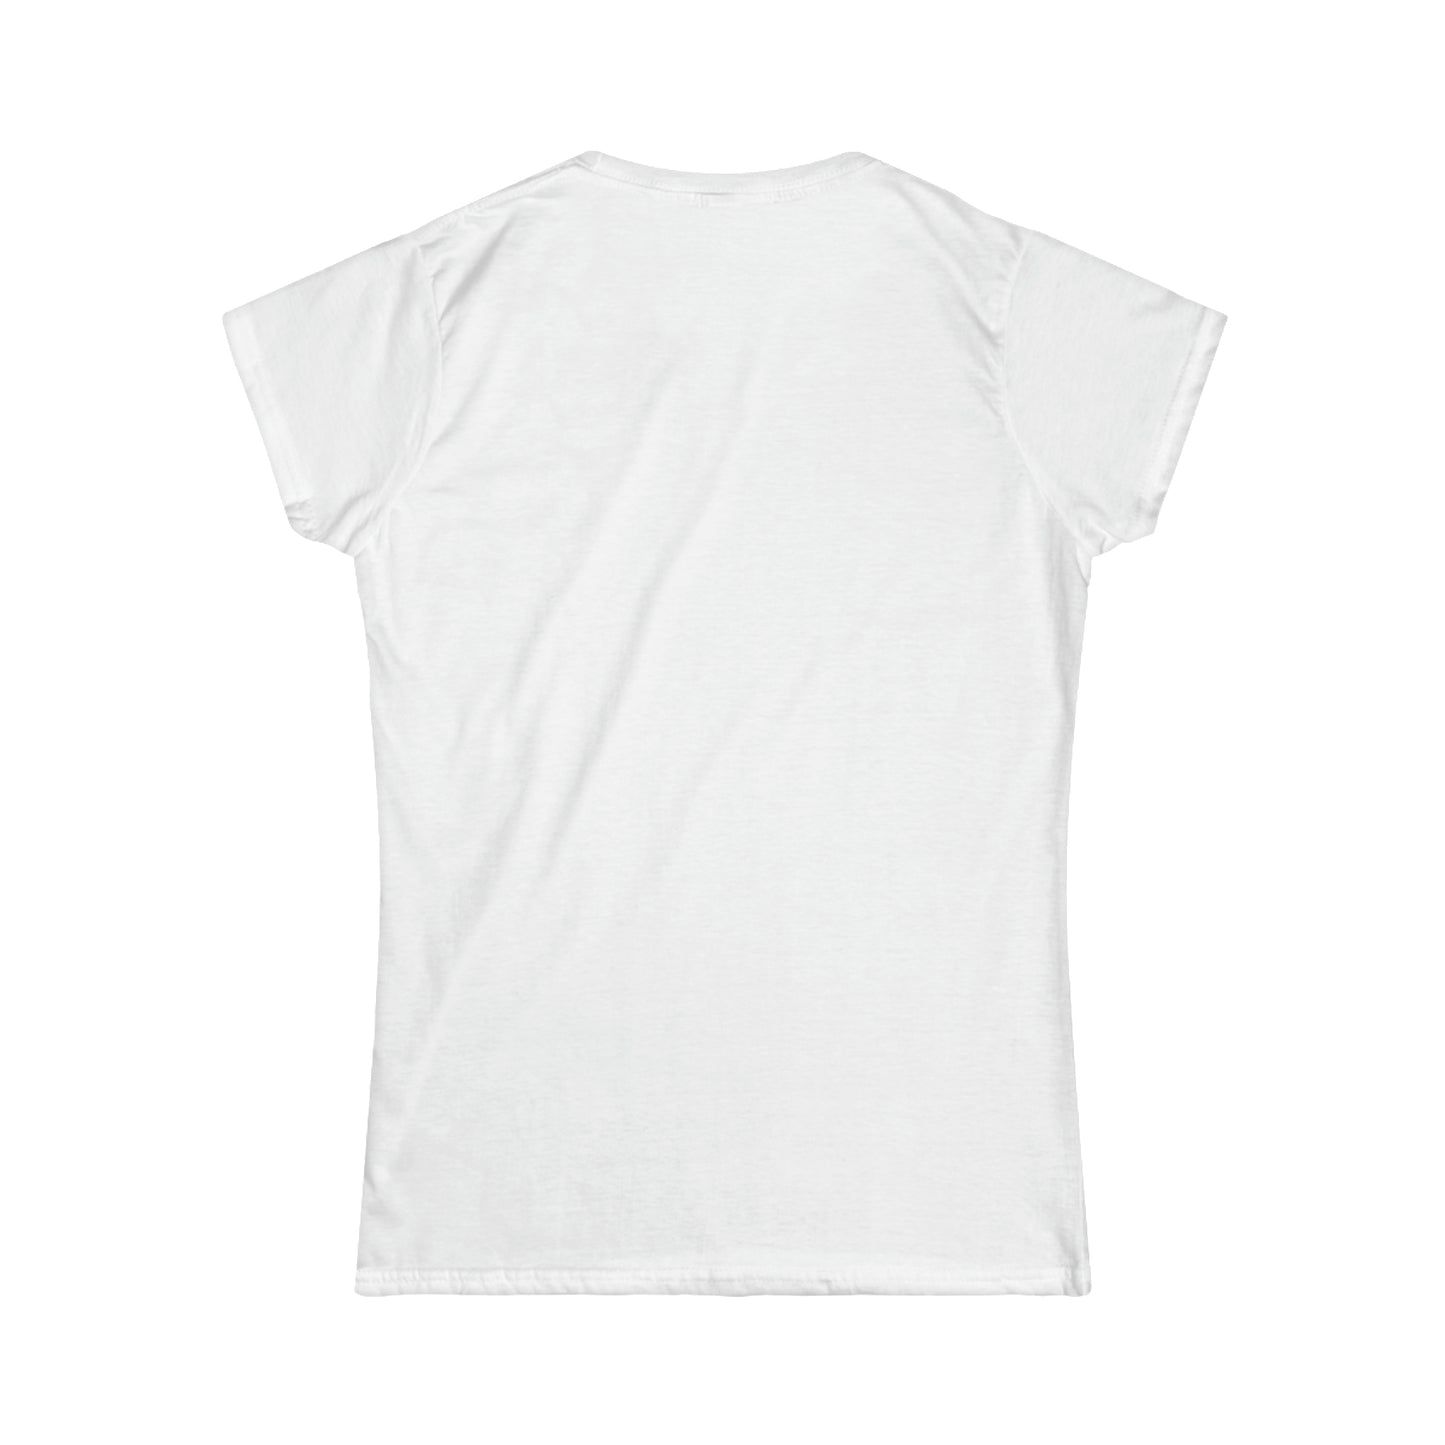 NAAMS Women's Design your Own Softstyle Tee - 4.5oz 100% Cotton